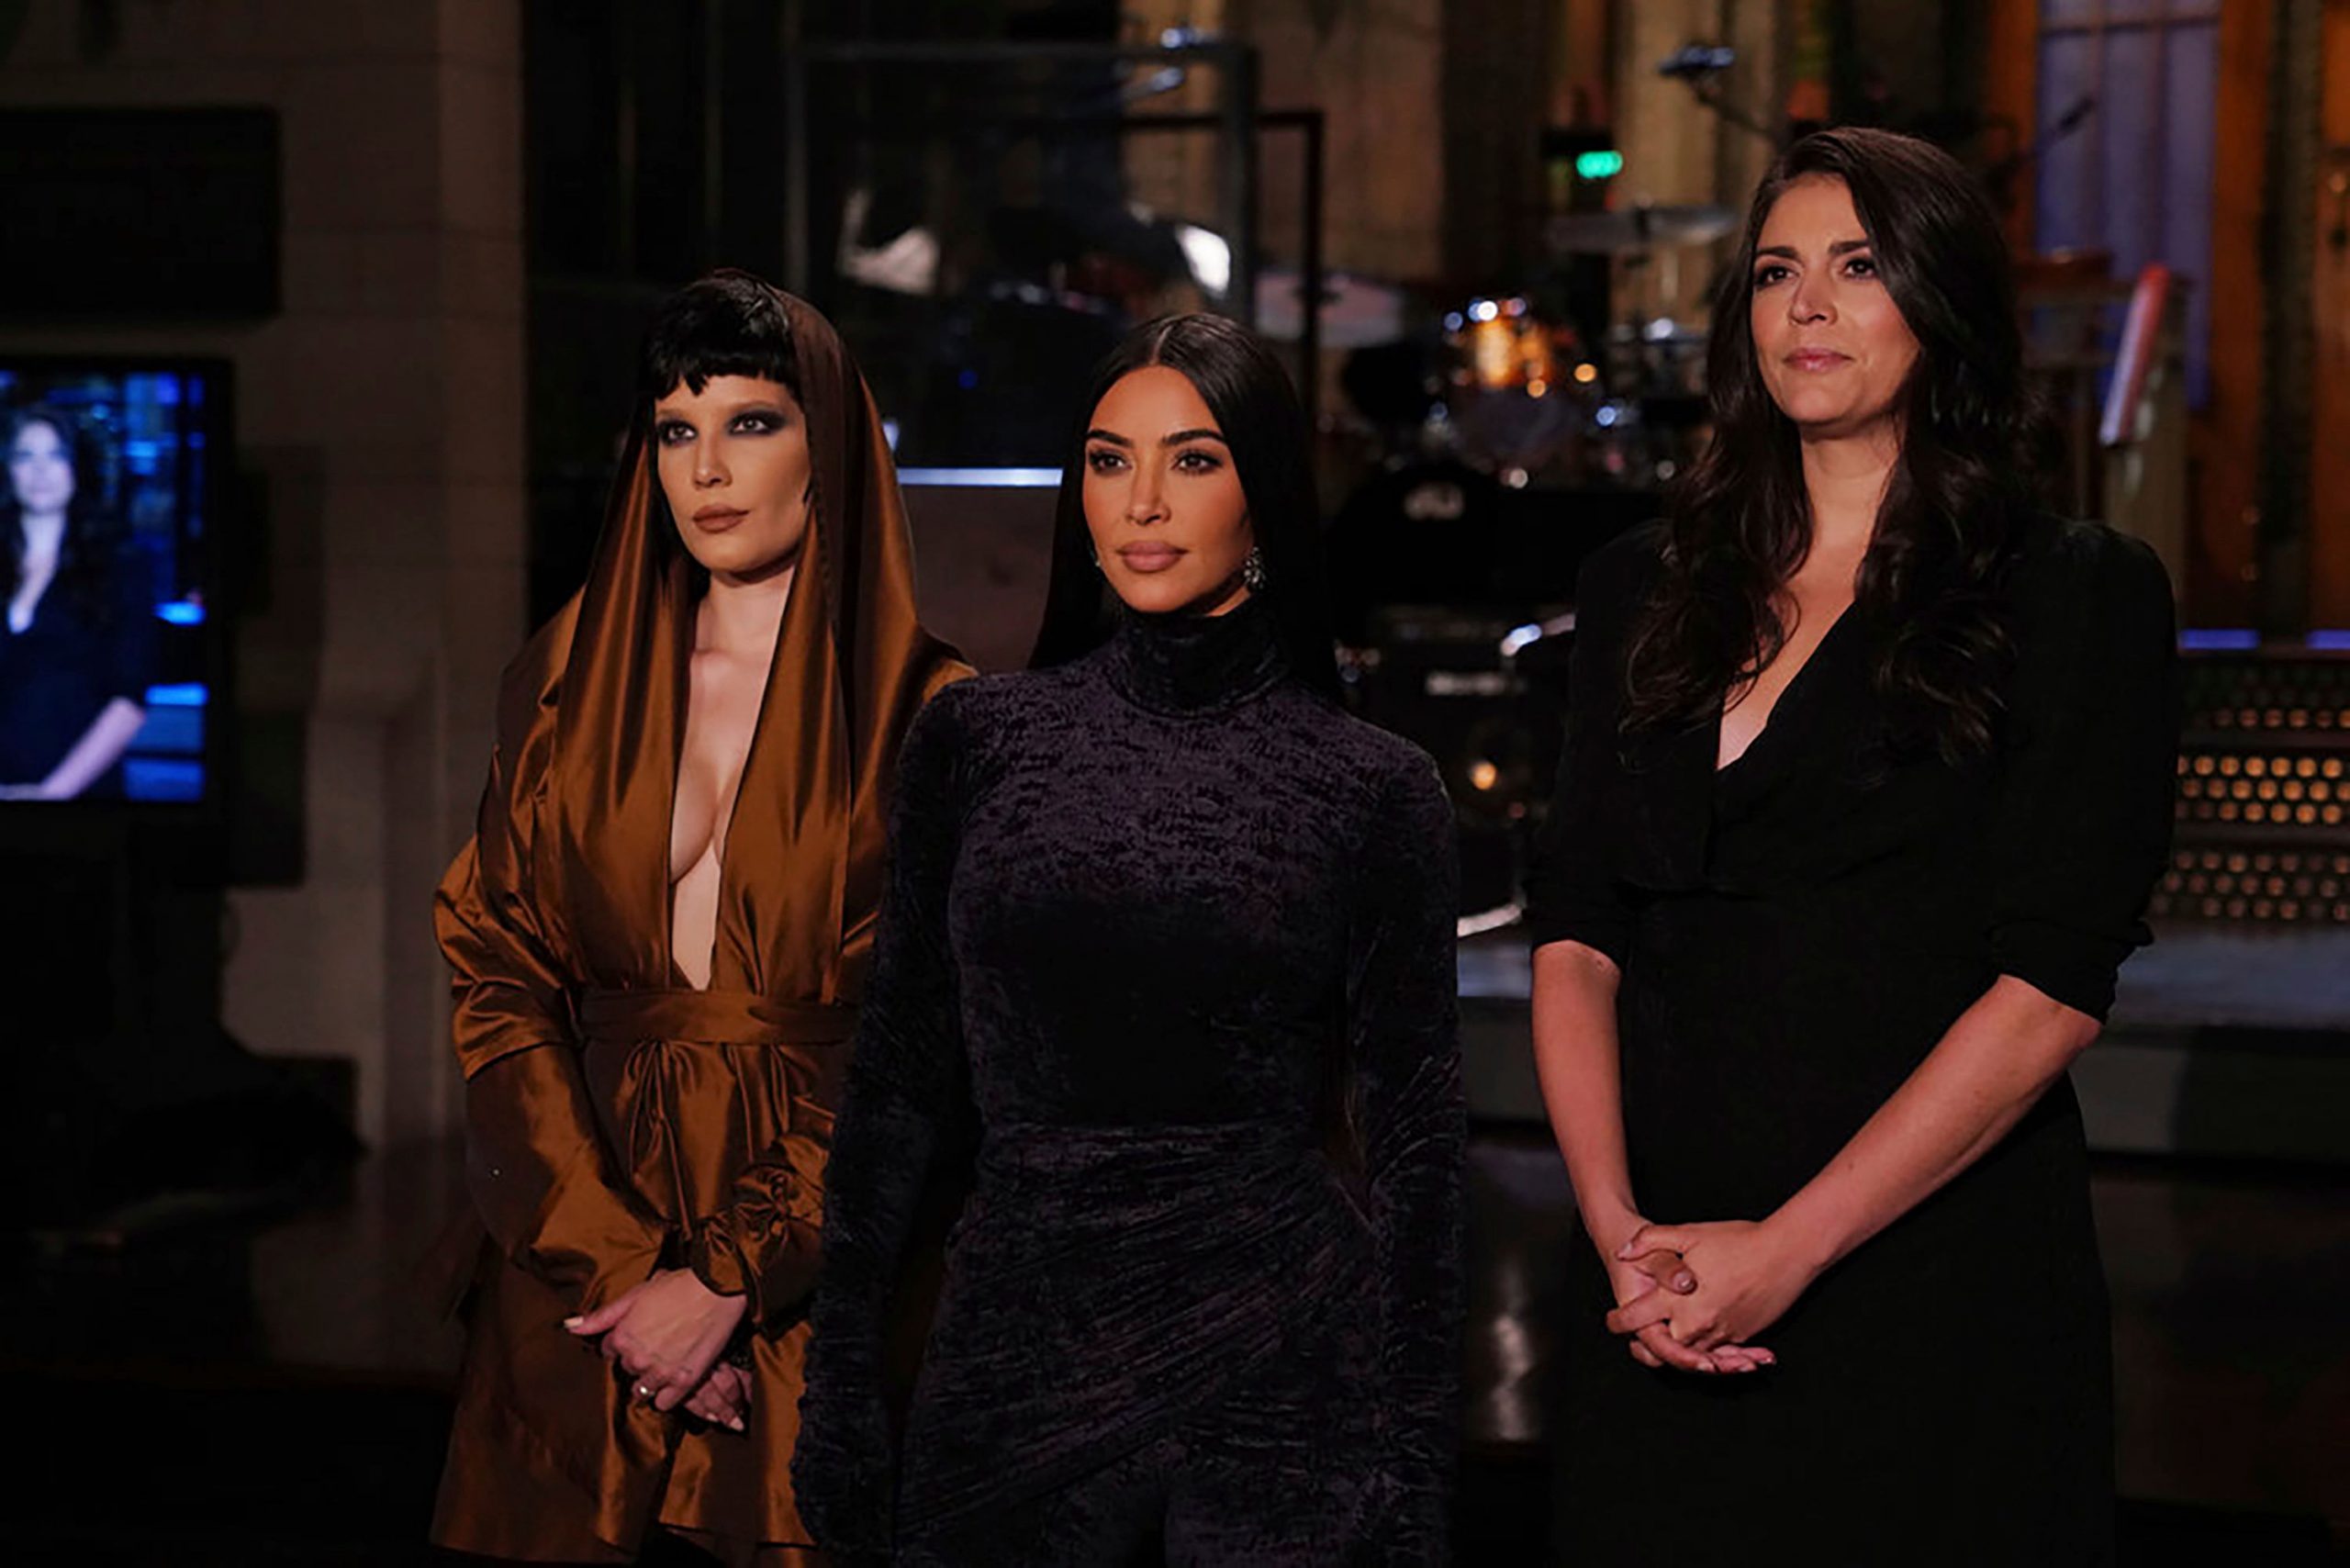 SNL: Kim Kardashian takes dig at Kanye West’s presidential run, roasts family